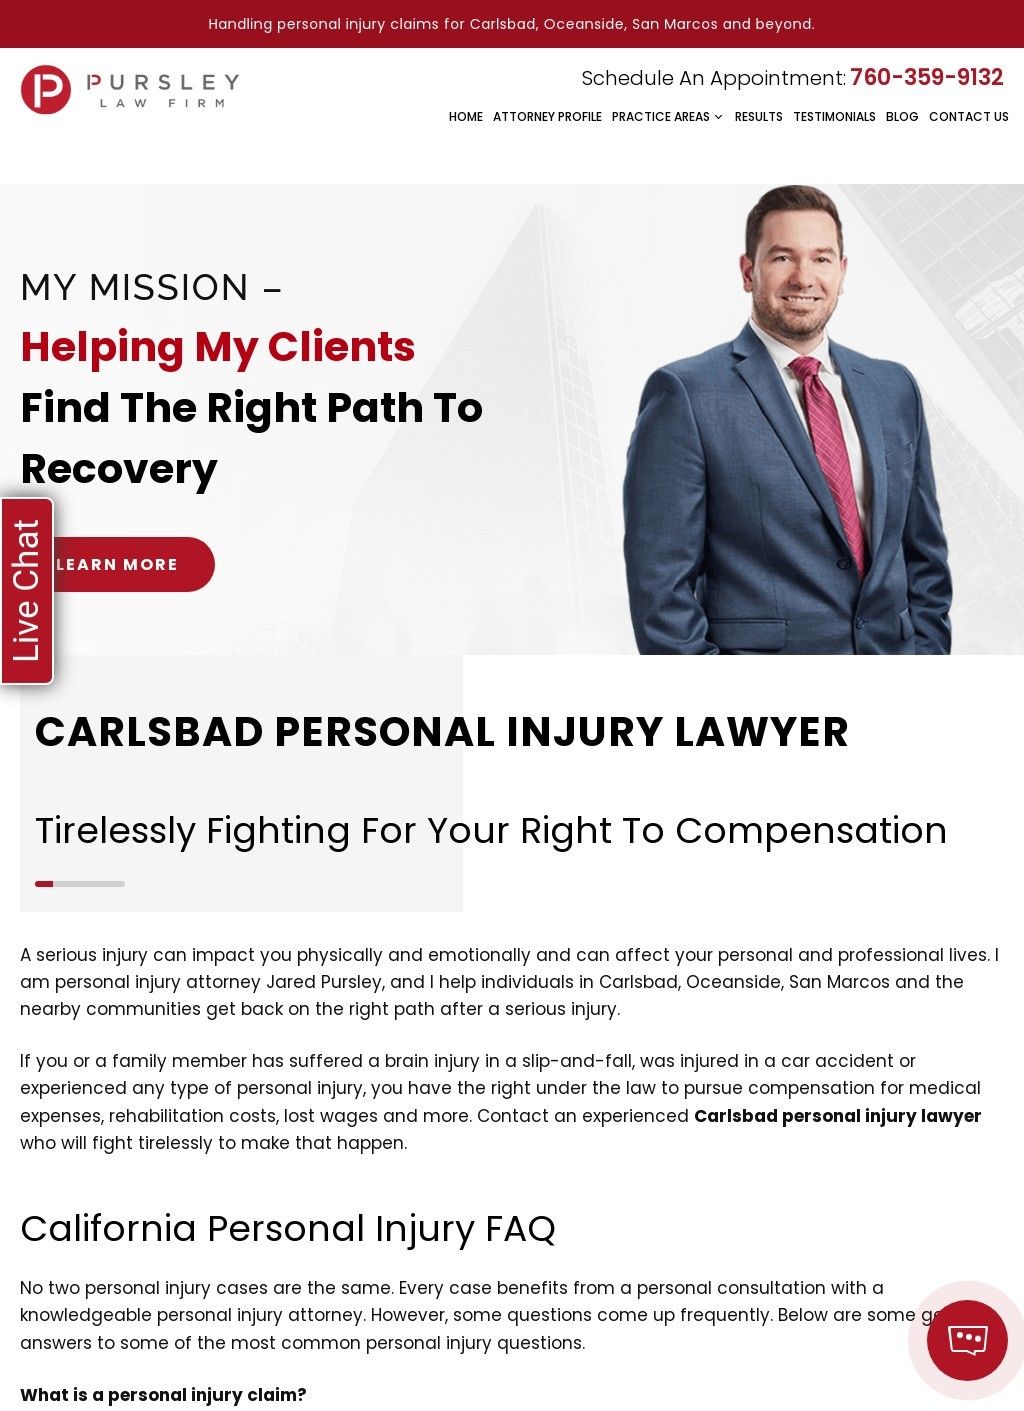 Carlsbad Personal Injury Lawyer